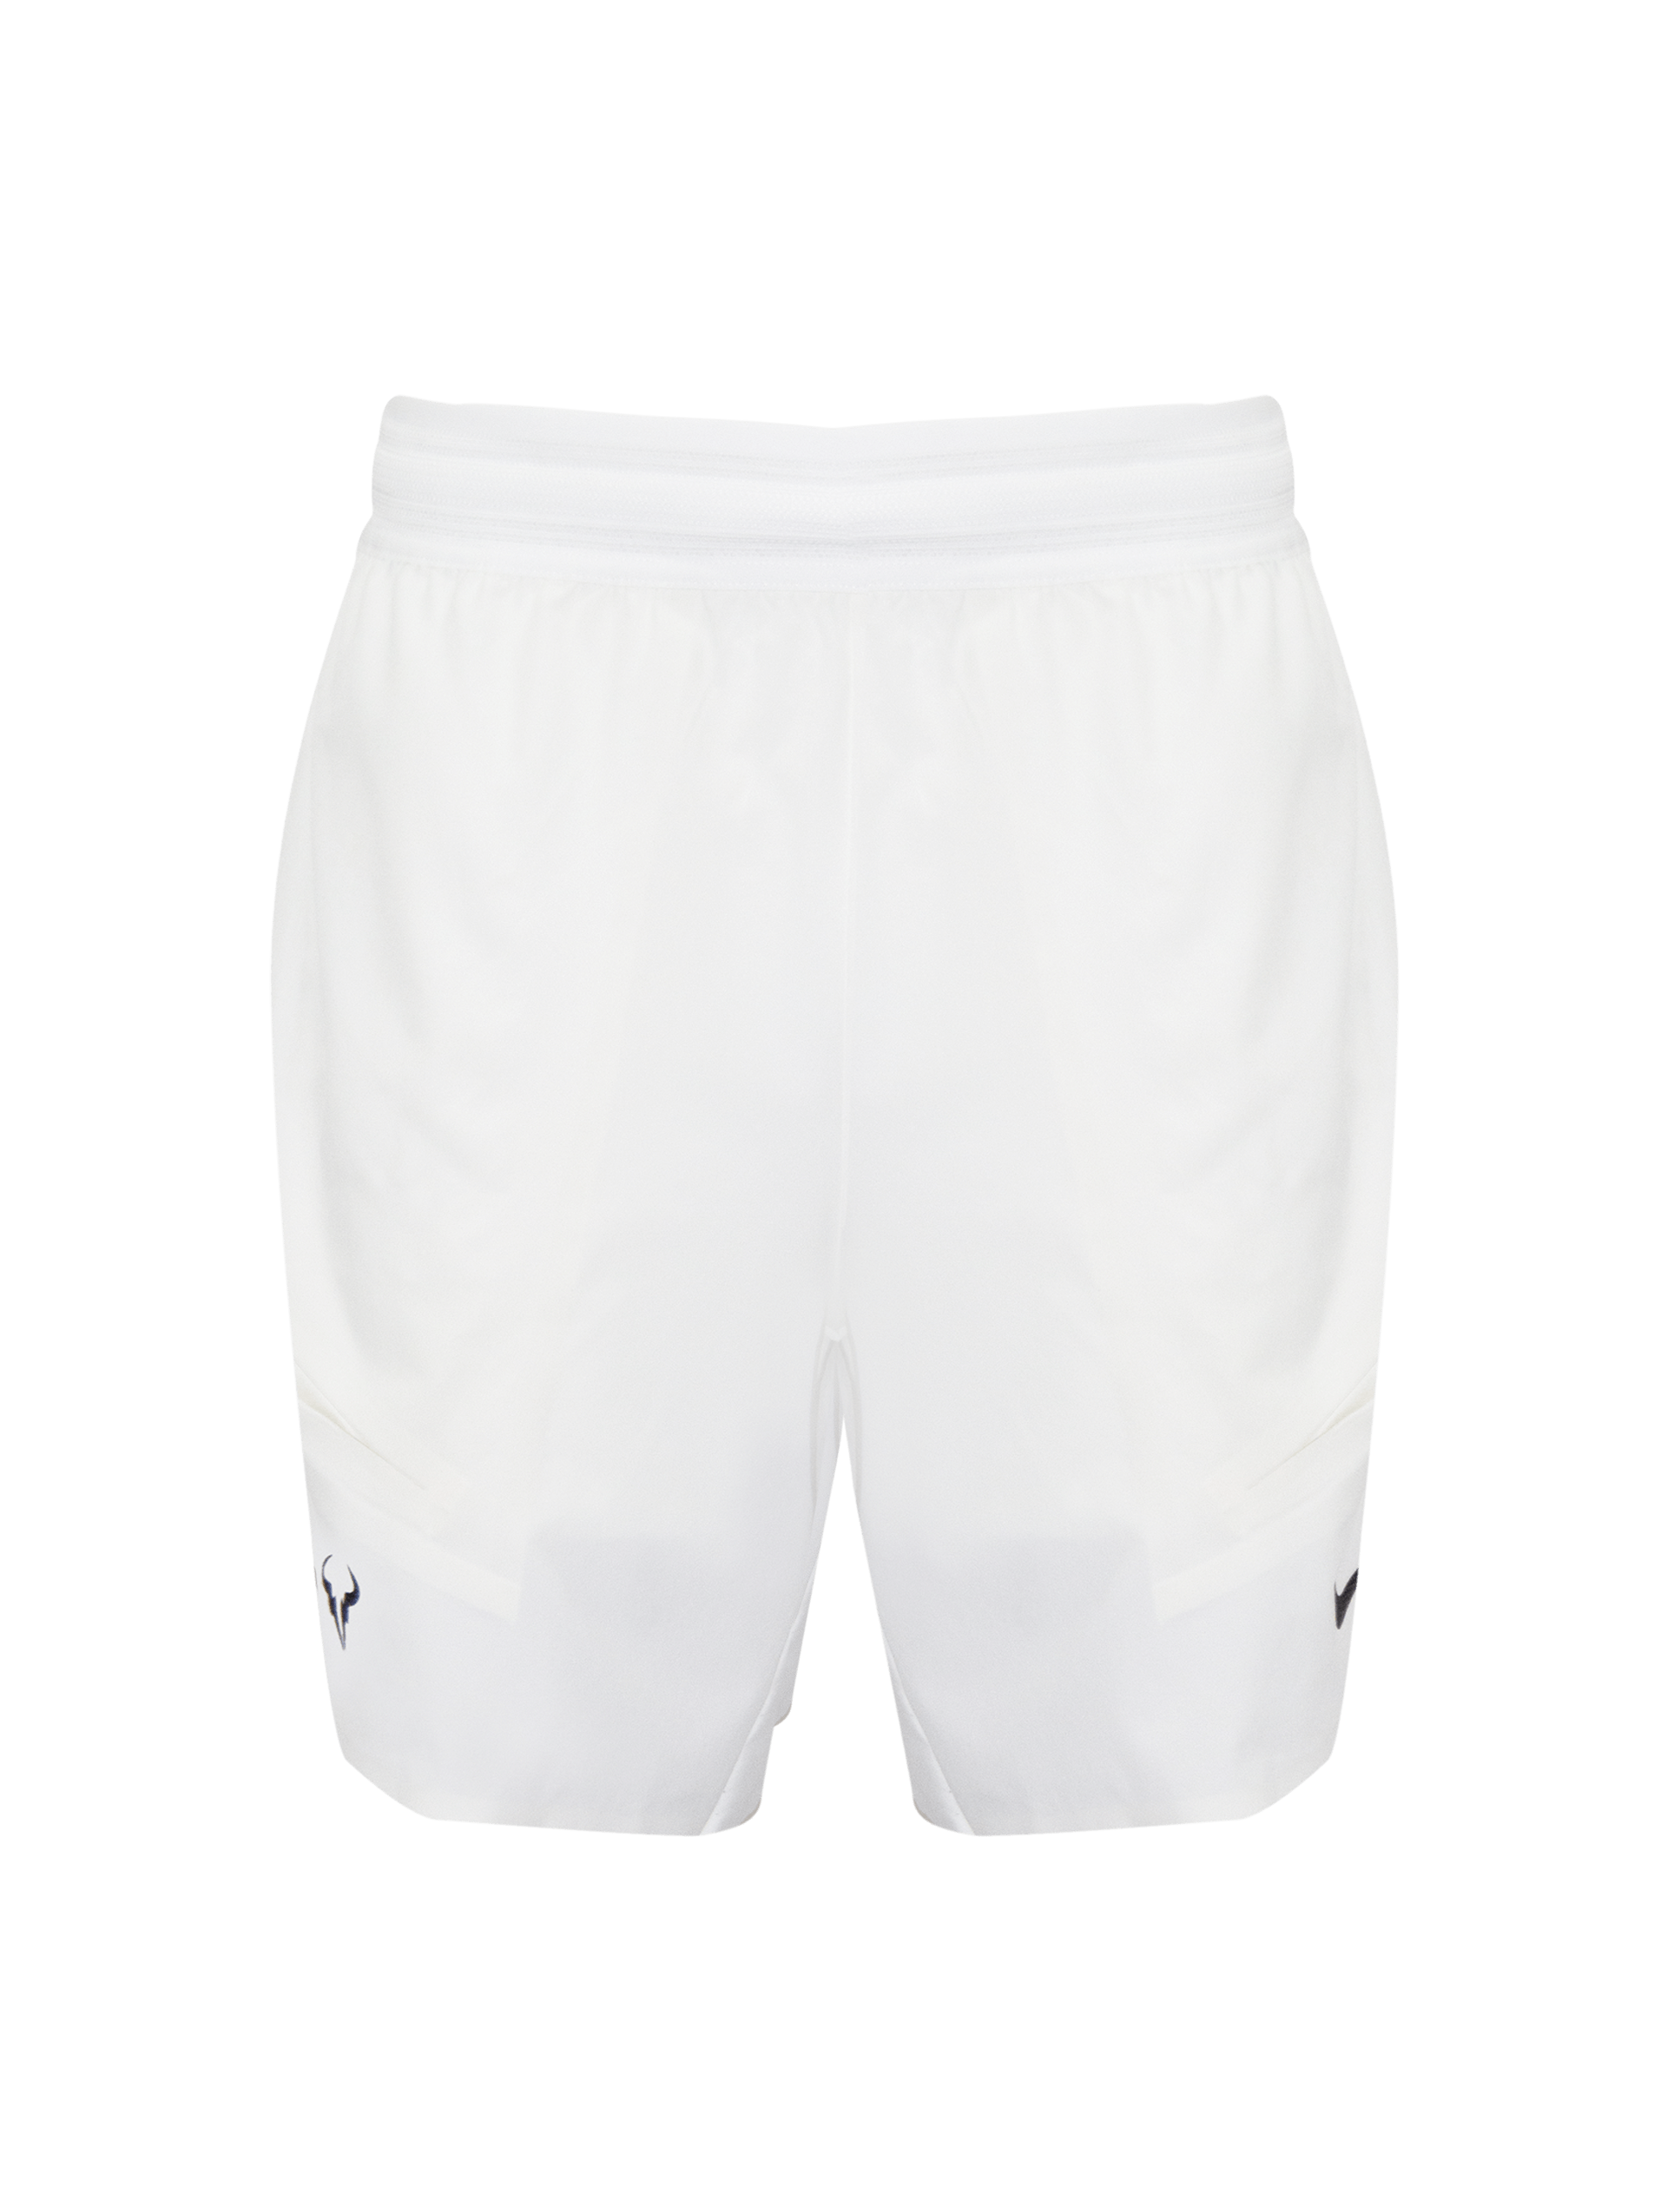 Shorts Nike Curto Masculino Branco